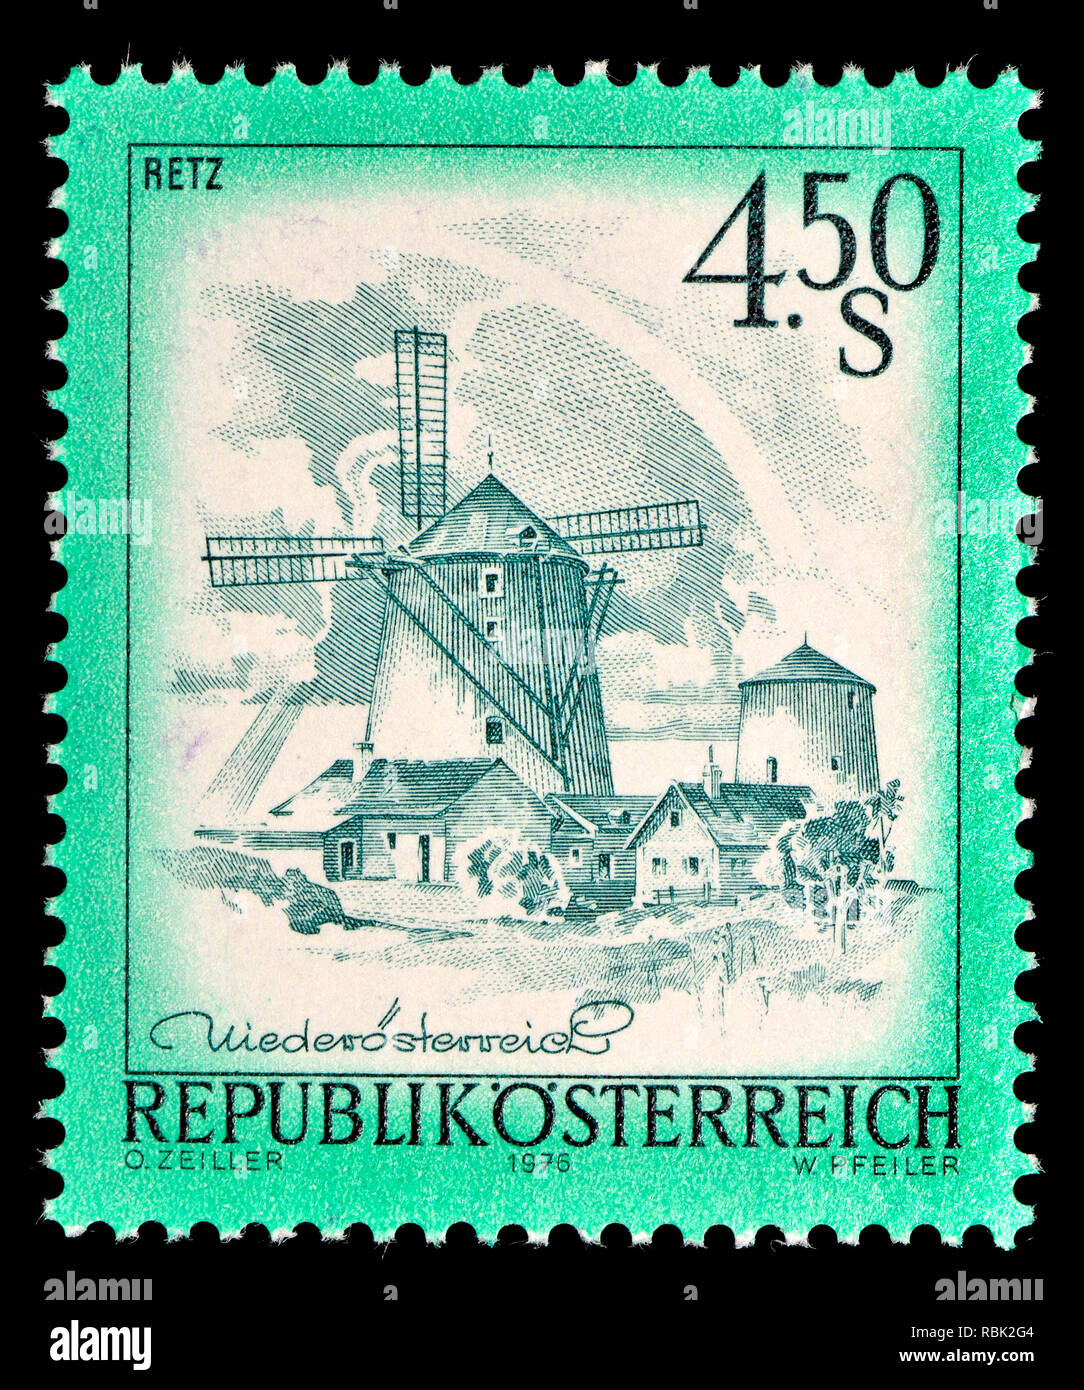 Austrian definitive postage stamp (1976) : Retz Stock Photo